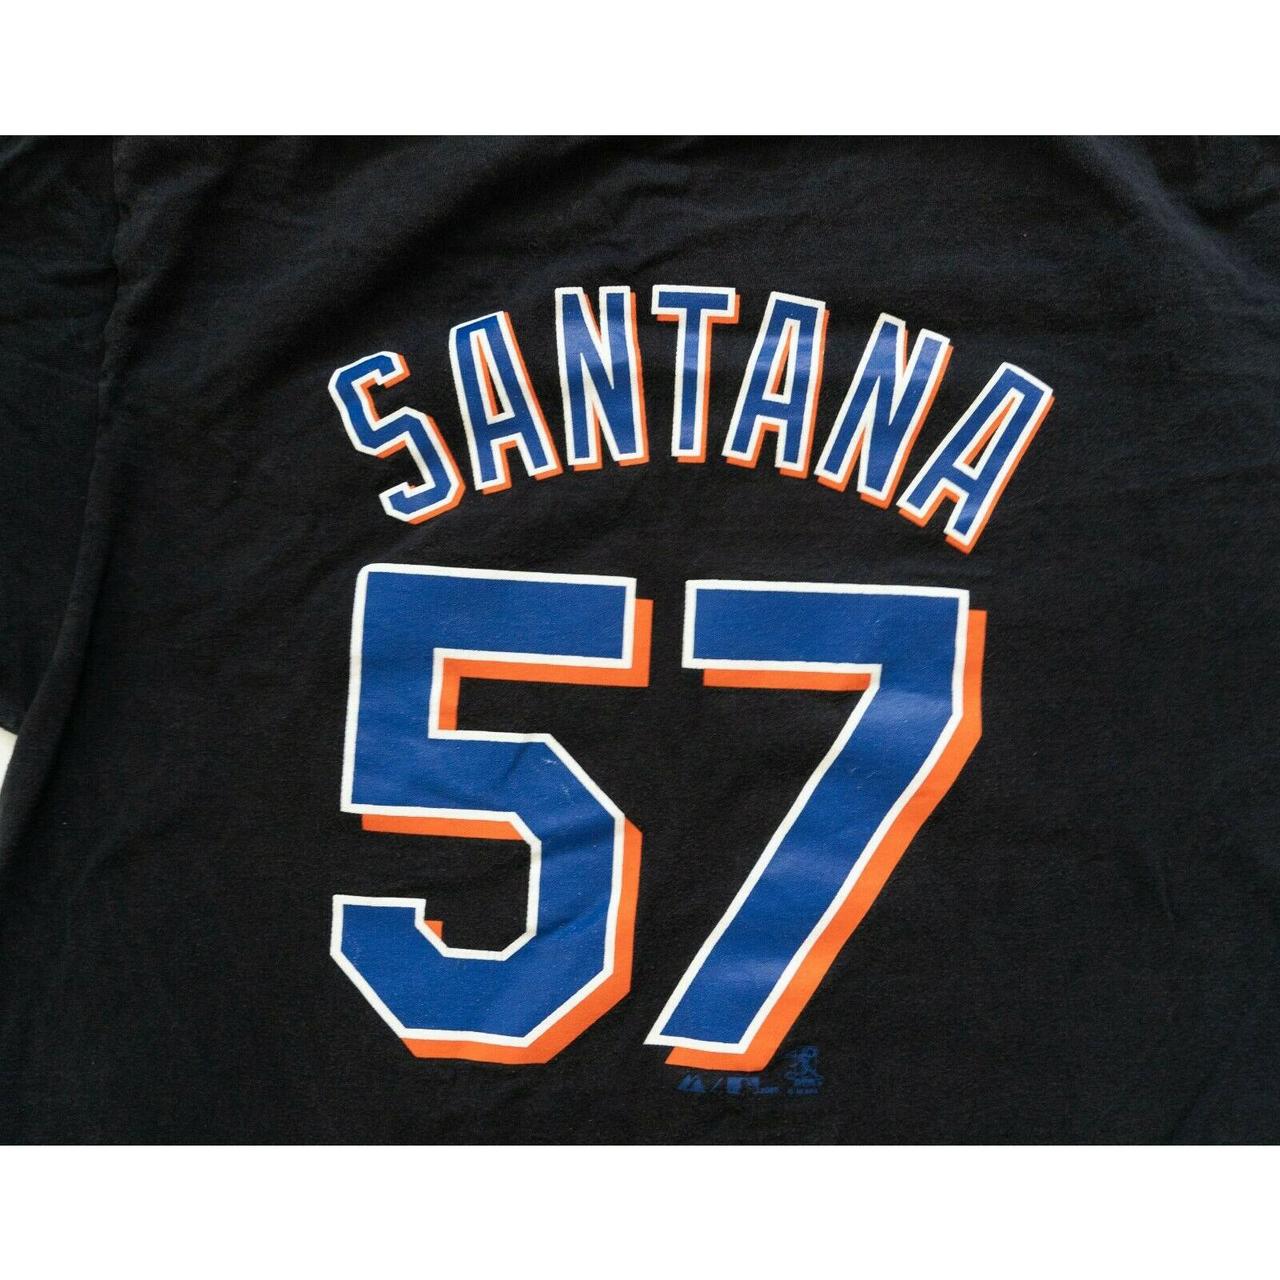 Johan Santana No Hitter Shirt #newyorkmets - Depop